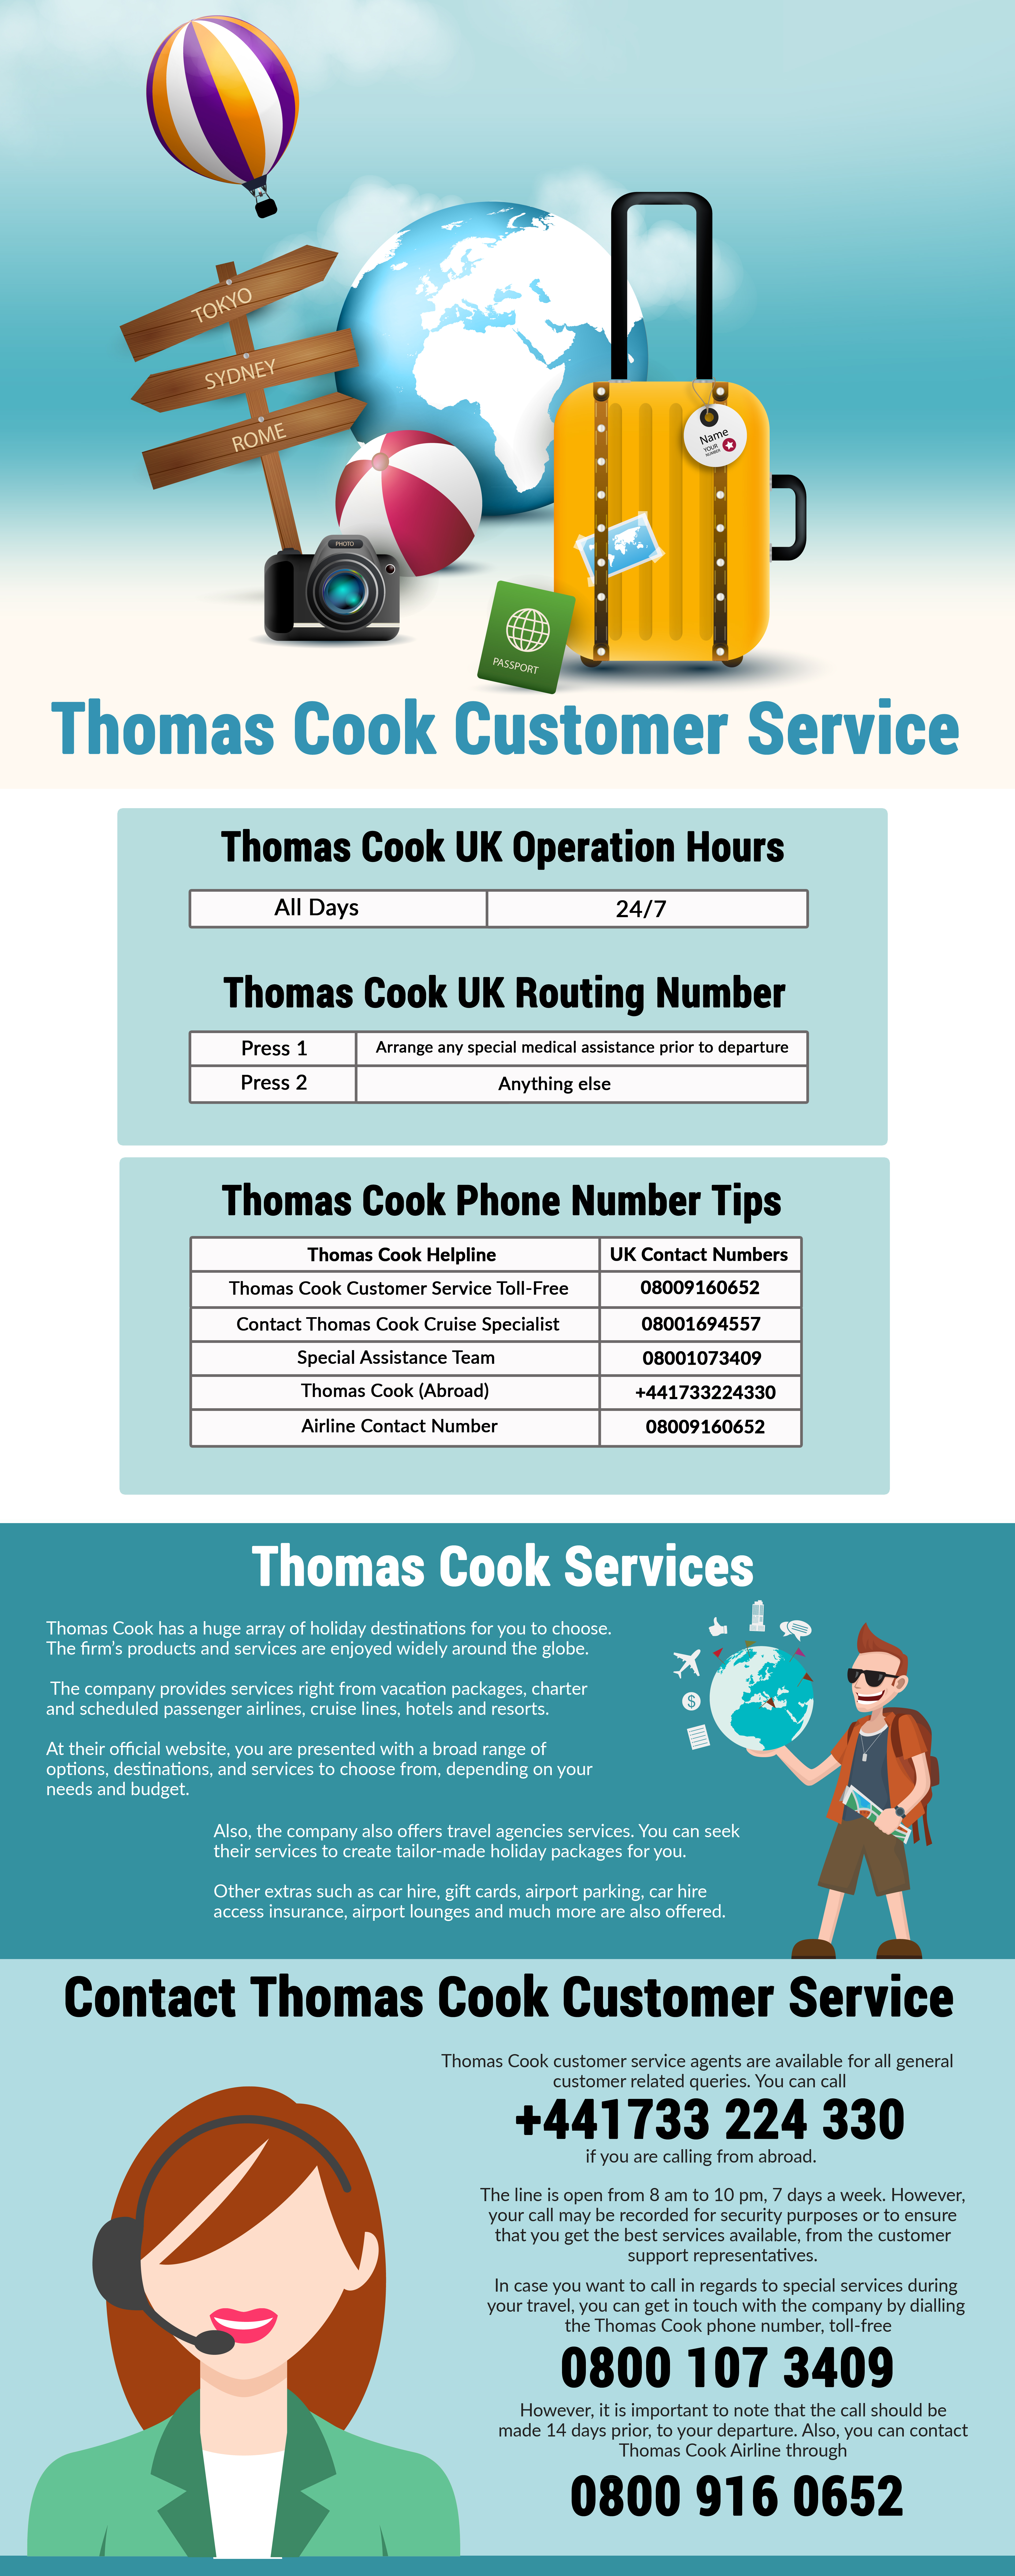 Thomas Cook Helpline